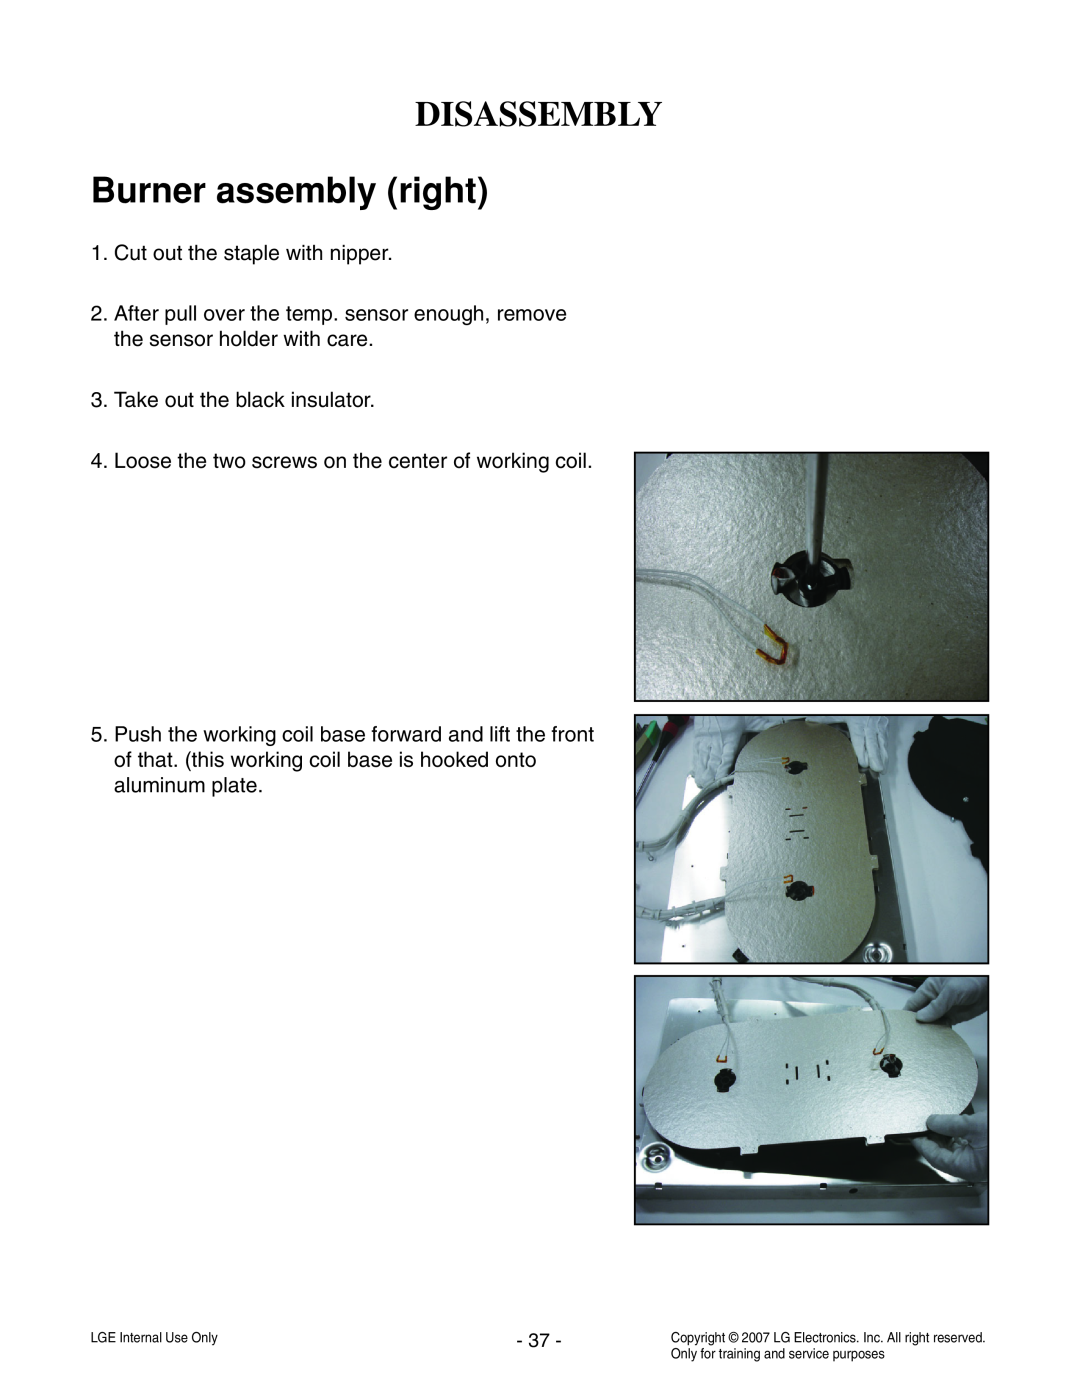 LG Electronics LCE30845 service manual Burner assembly right, Disassembly 